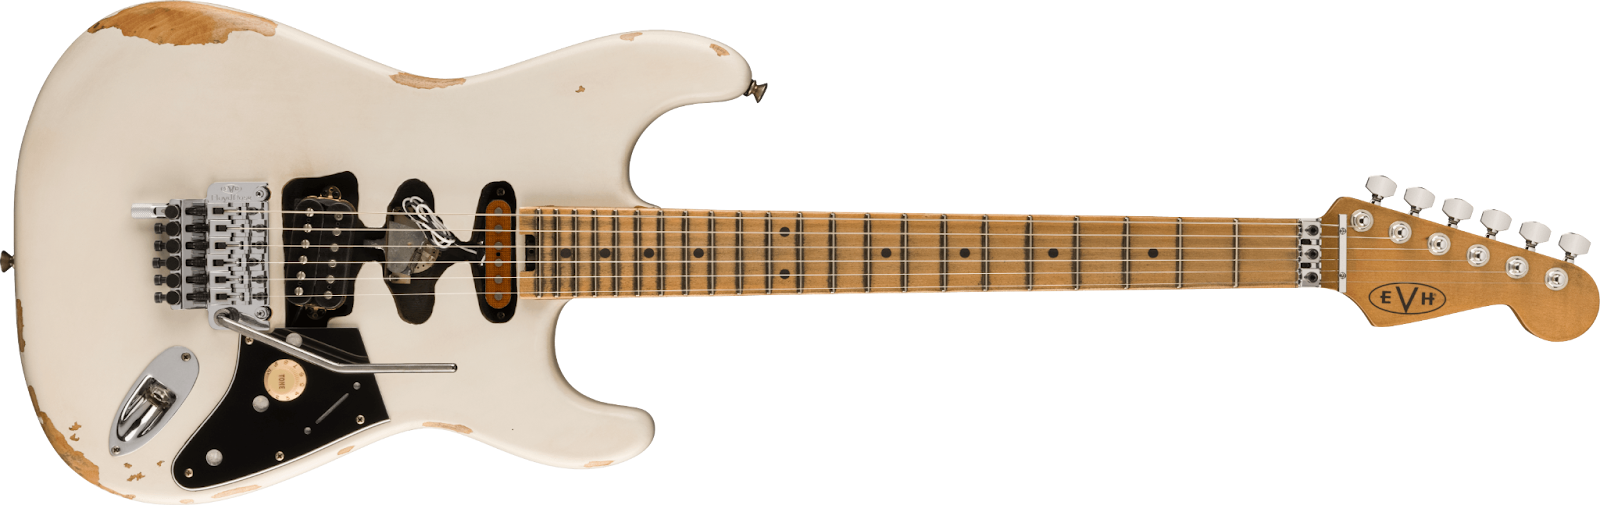 EVH Frankenstein Relic Electric Guitar